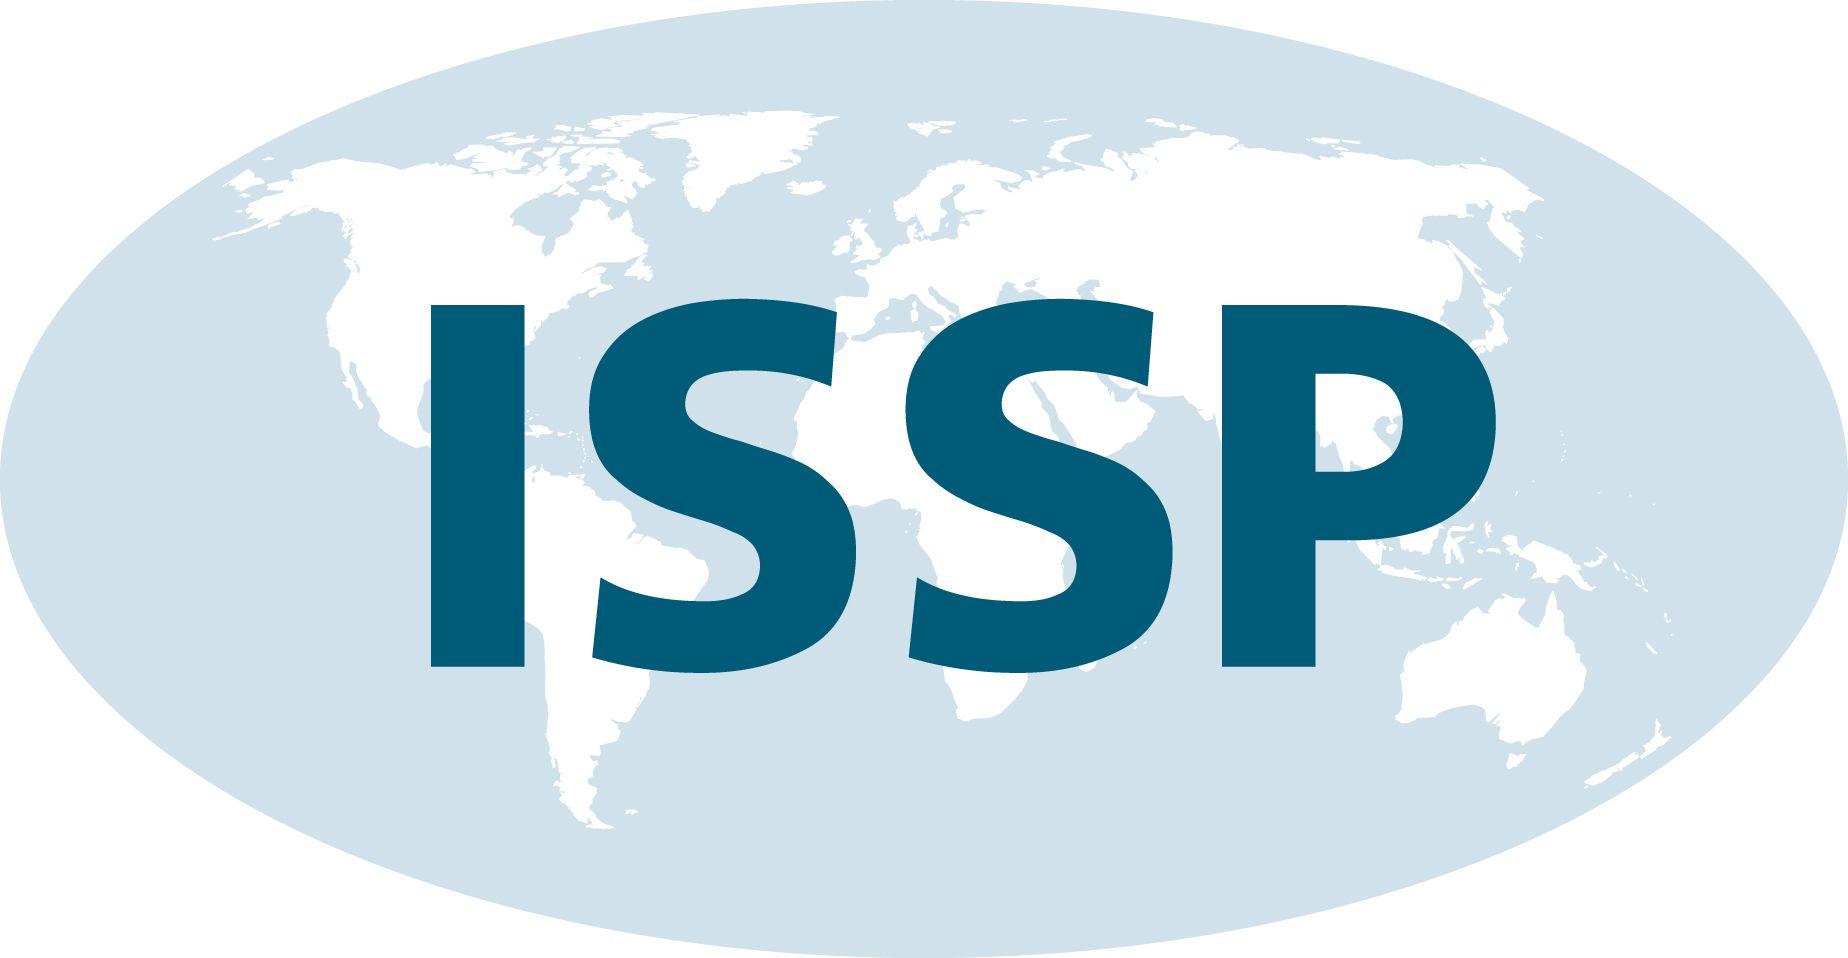 ISSP Logo - File:Wrldissp2006 logo hires.jpg - Wikimedia Commons